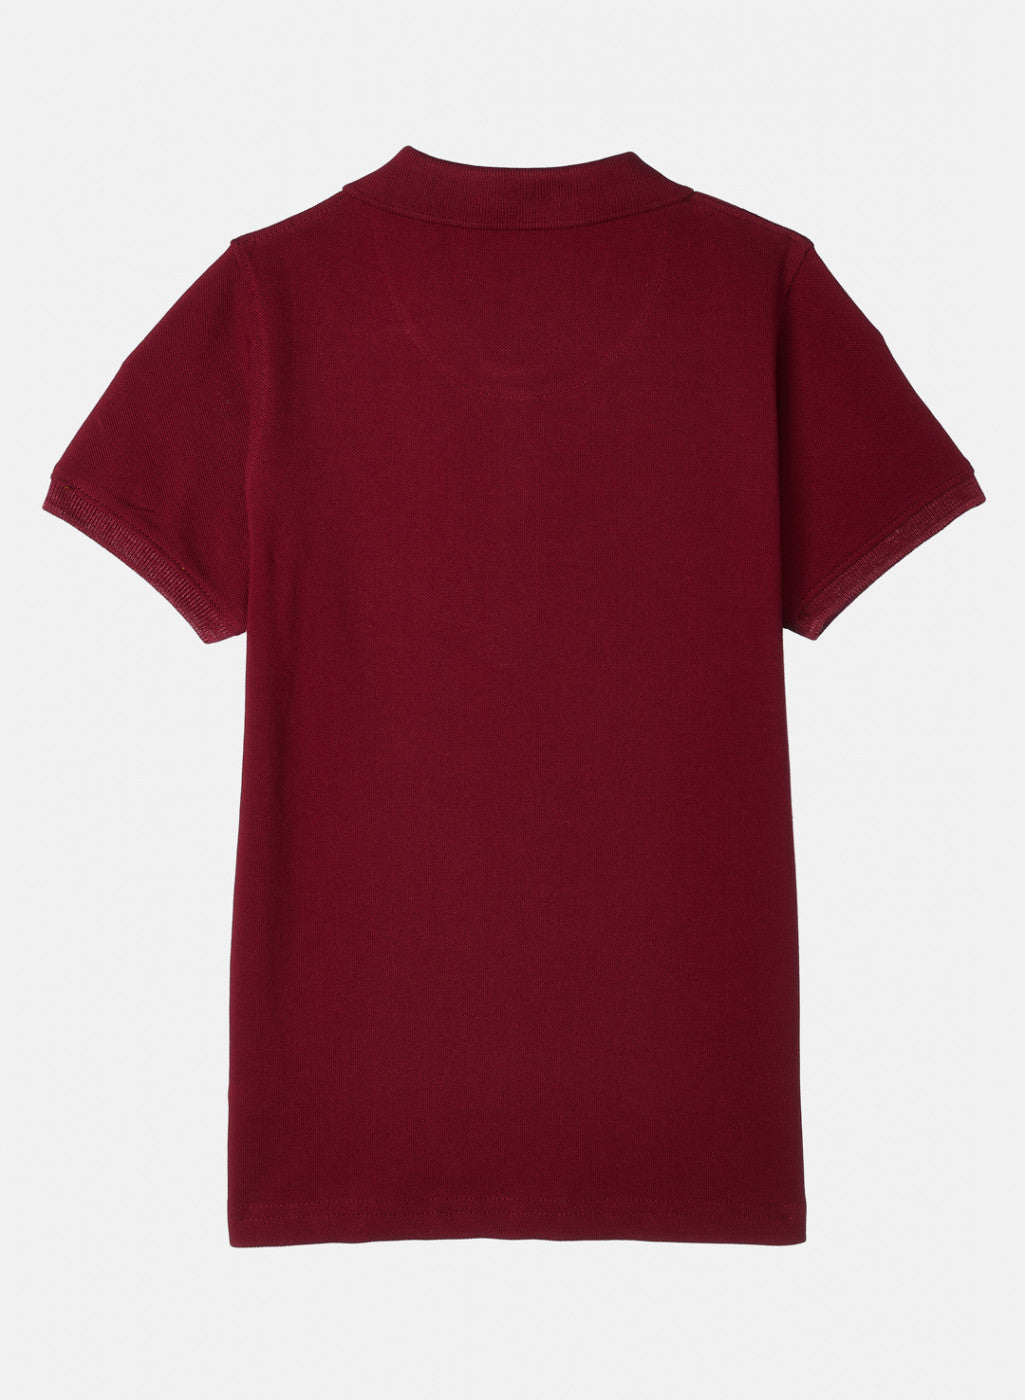 Boys Maroon Plain T-Shirt